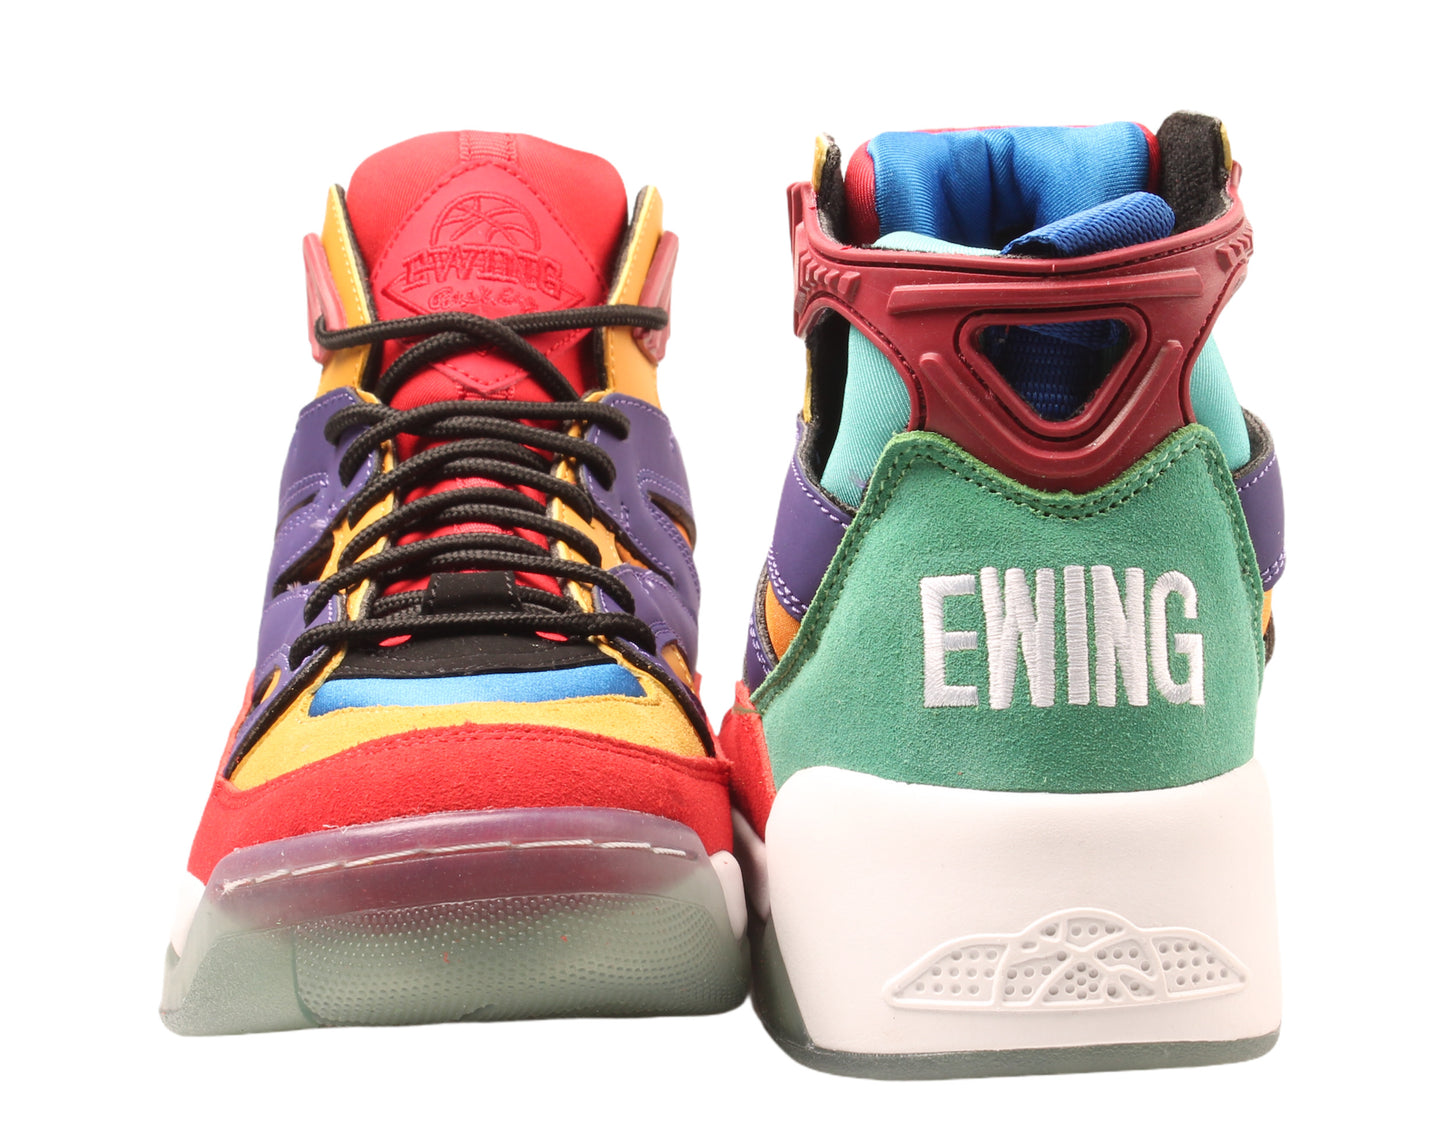 Ewing Athletics Ewing Image Remix Men's Basketball Shoes